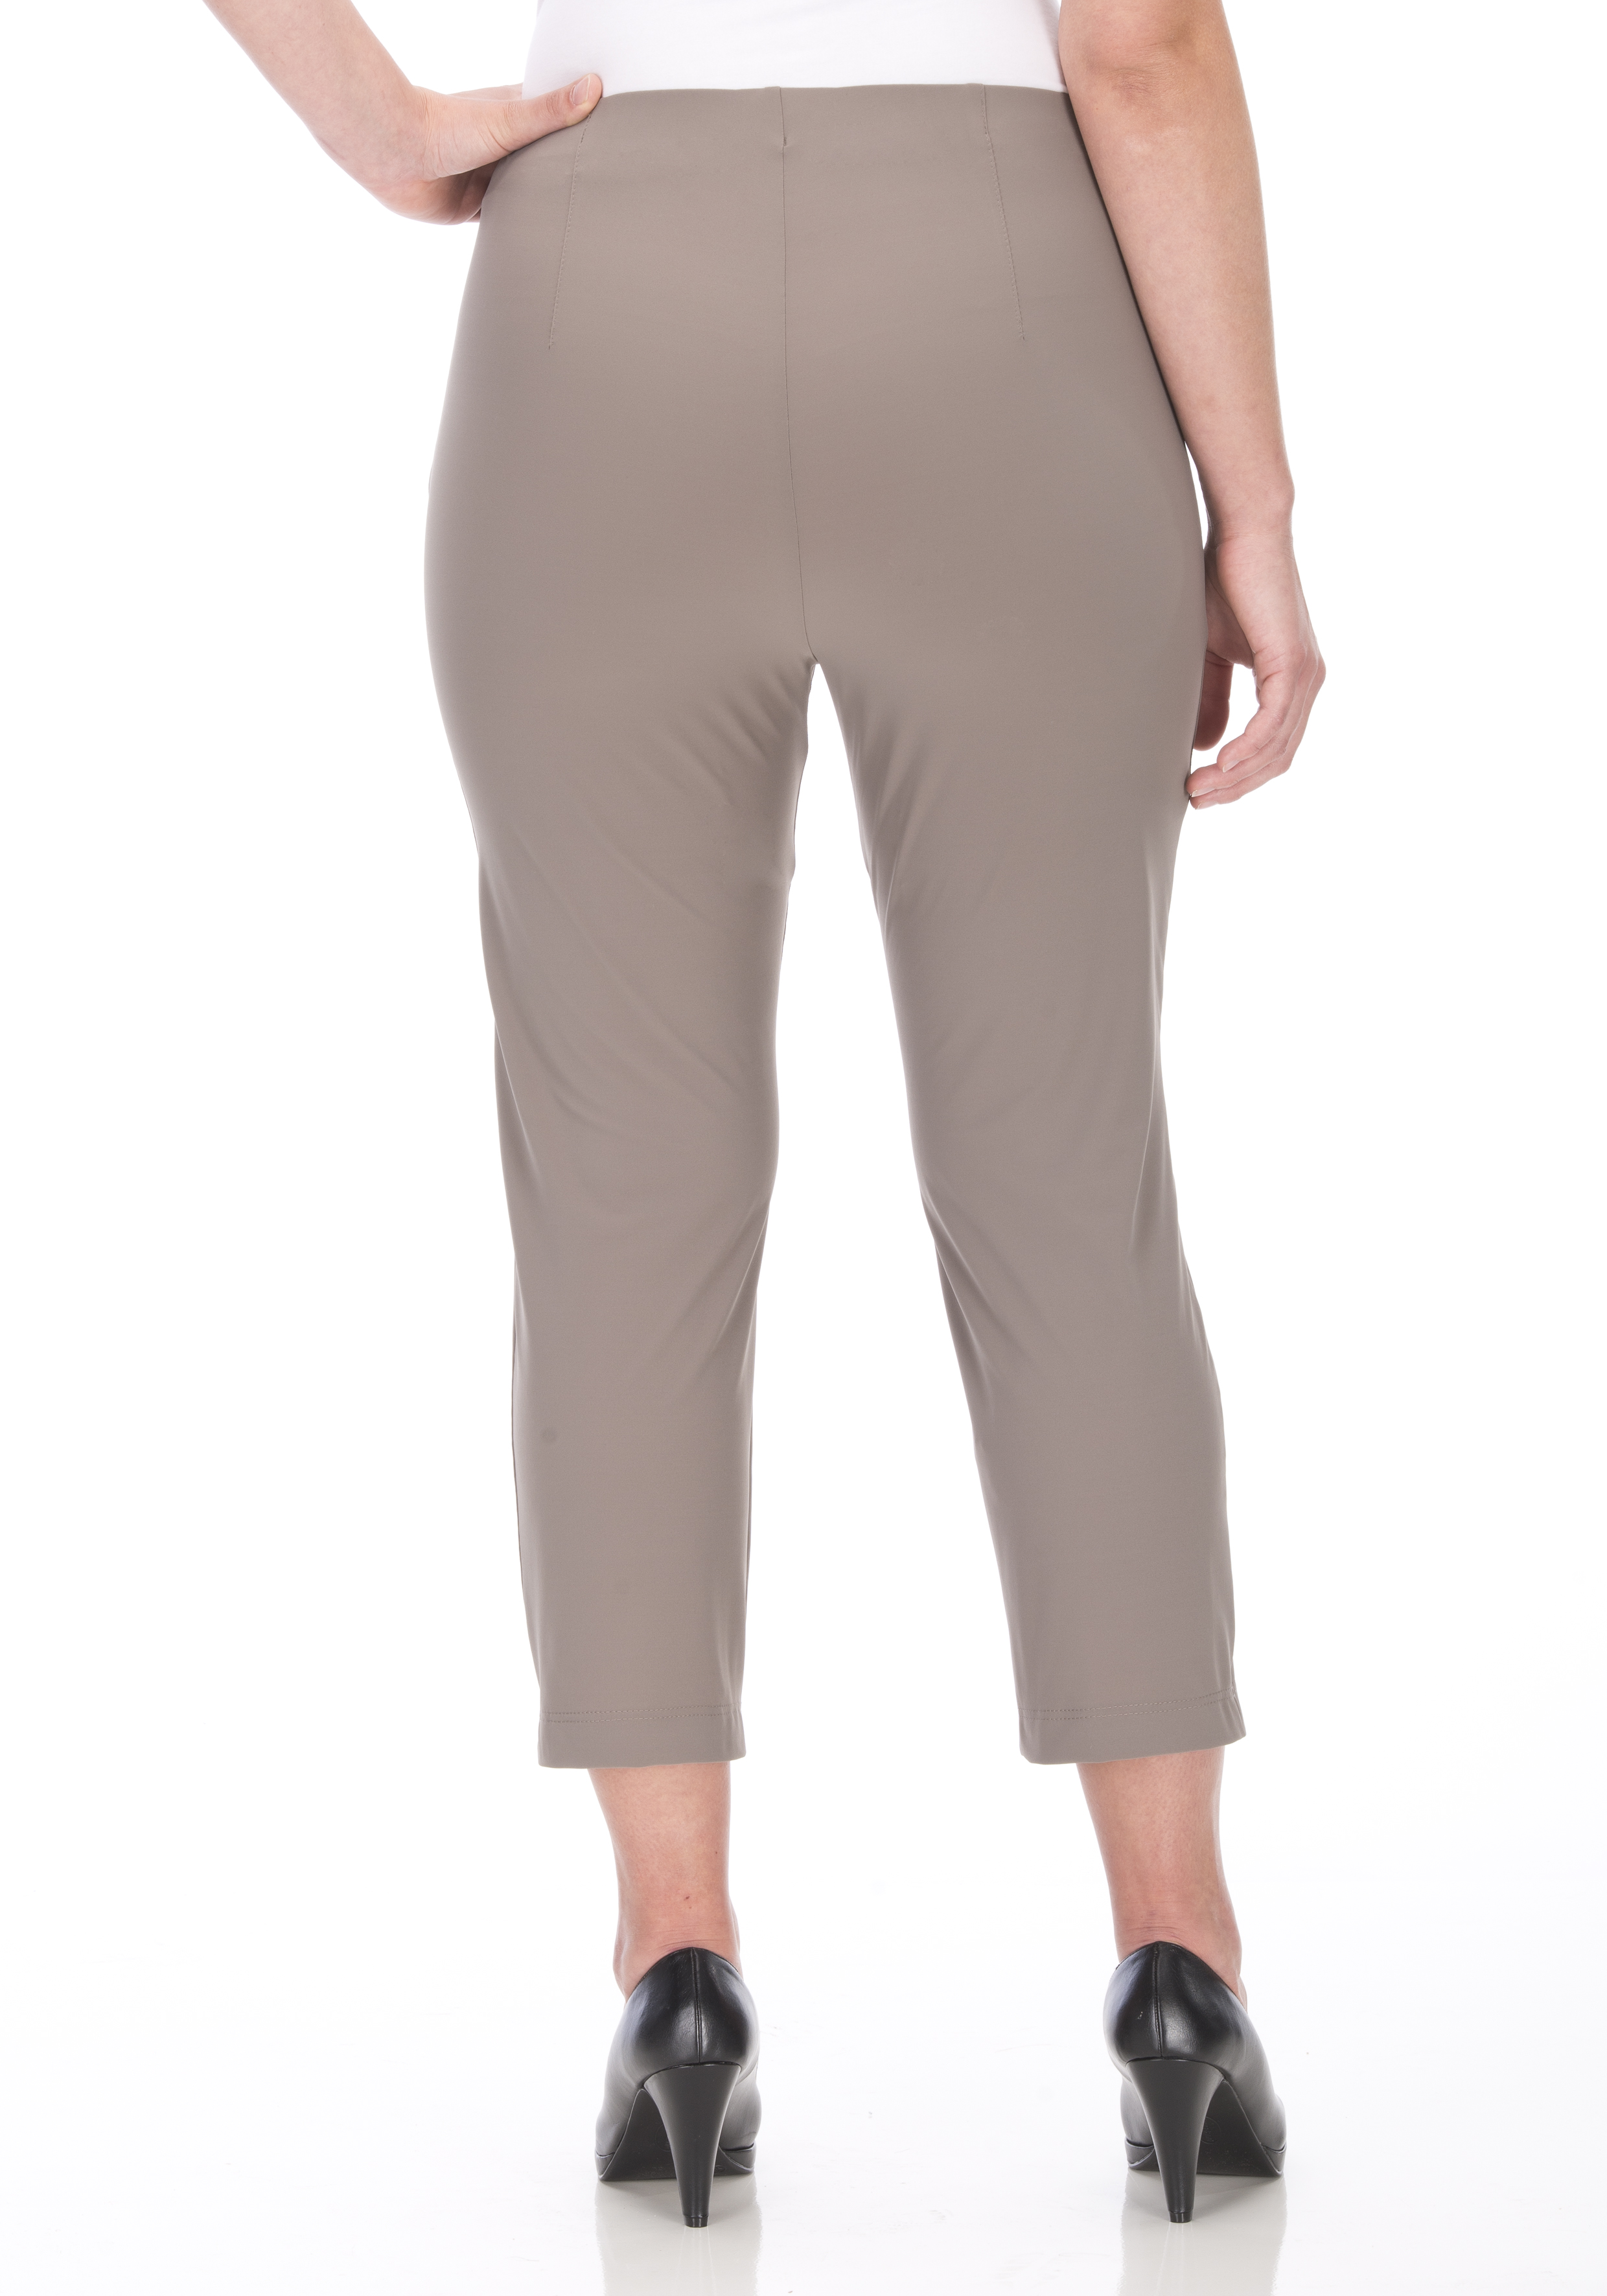 KjBRAND Trousers Curvy plus size 7/8 - BiNA Sensitive Summer by SUSIE